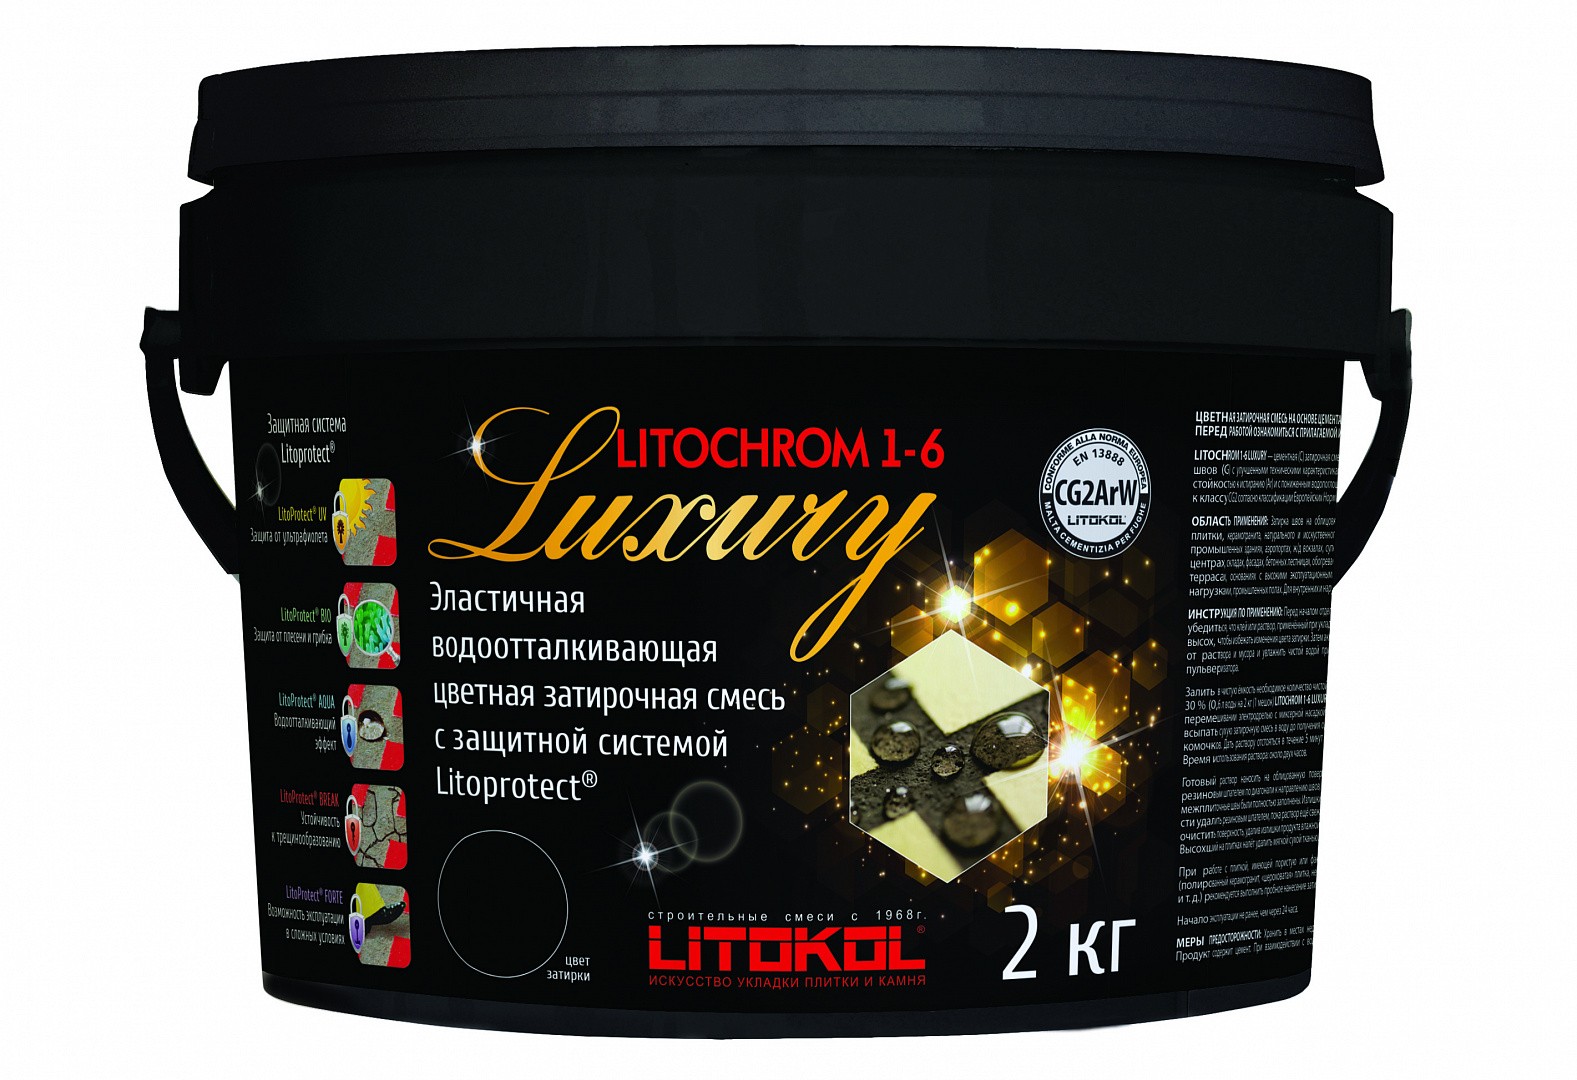 Цементная затирочная смесь LITOCHROM 1-6 LUXURY C.470